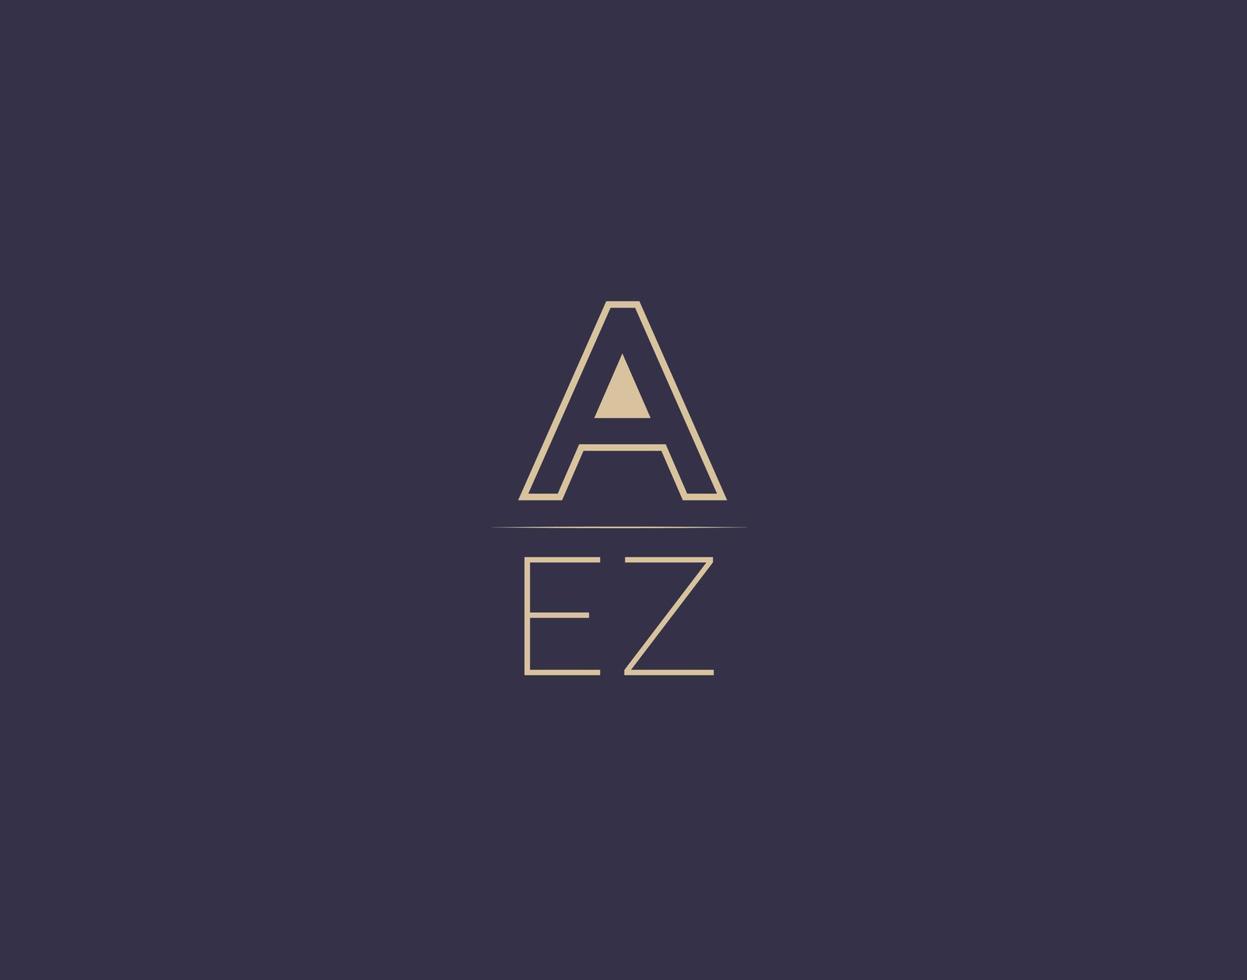 AEZ letter logo design modern minimalist vector images